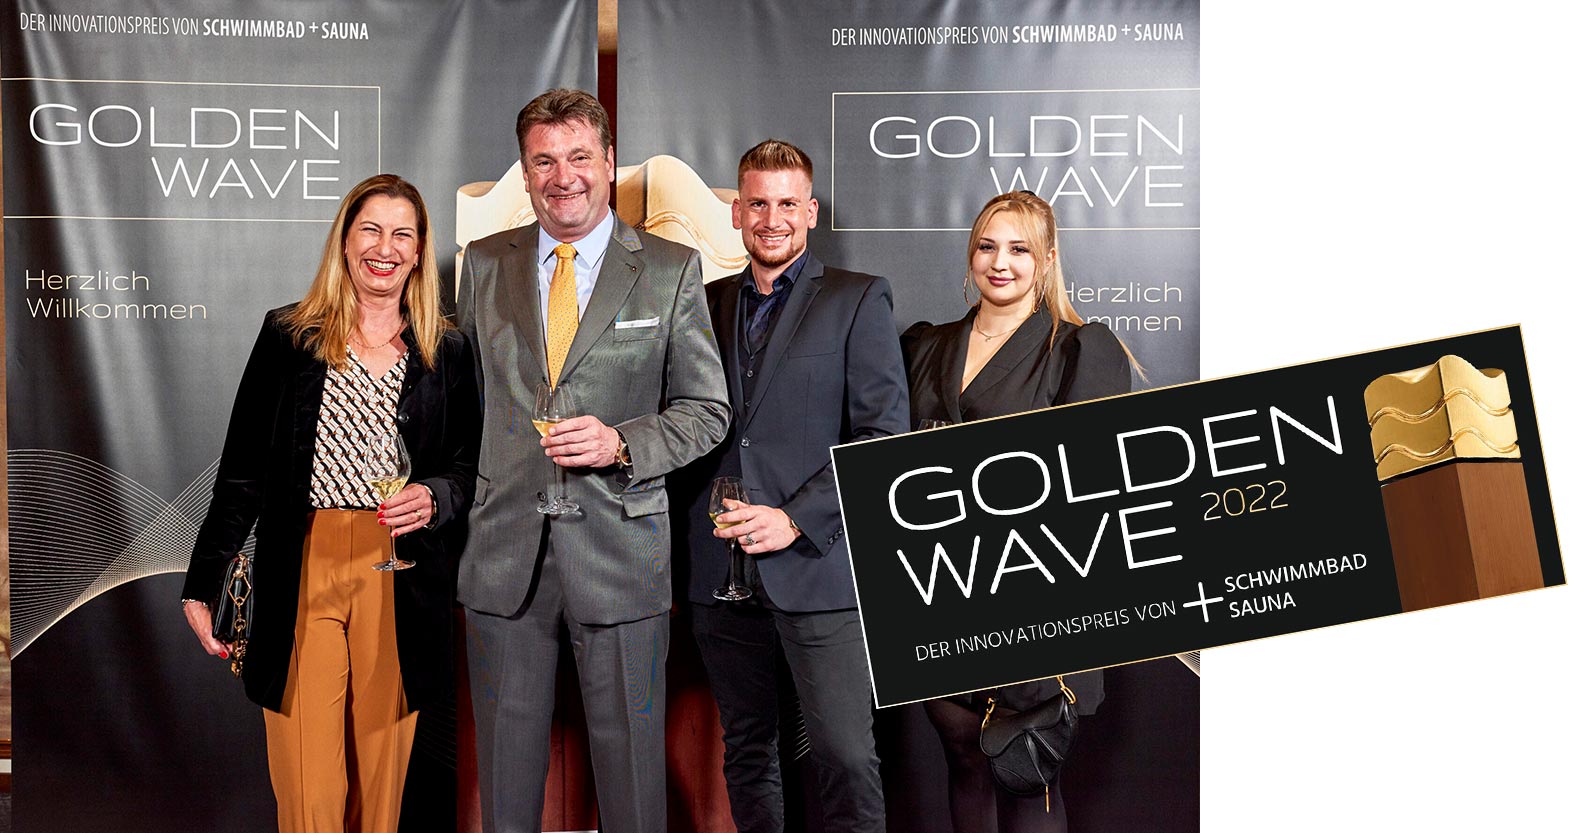 Golden Wave 2022